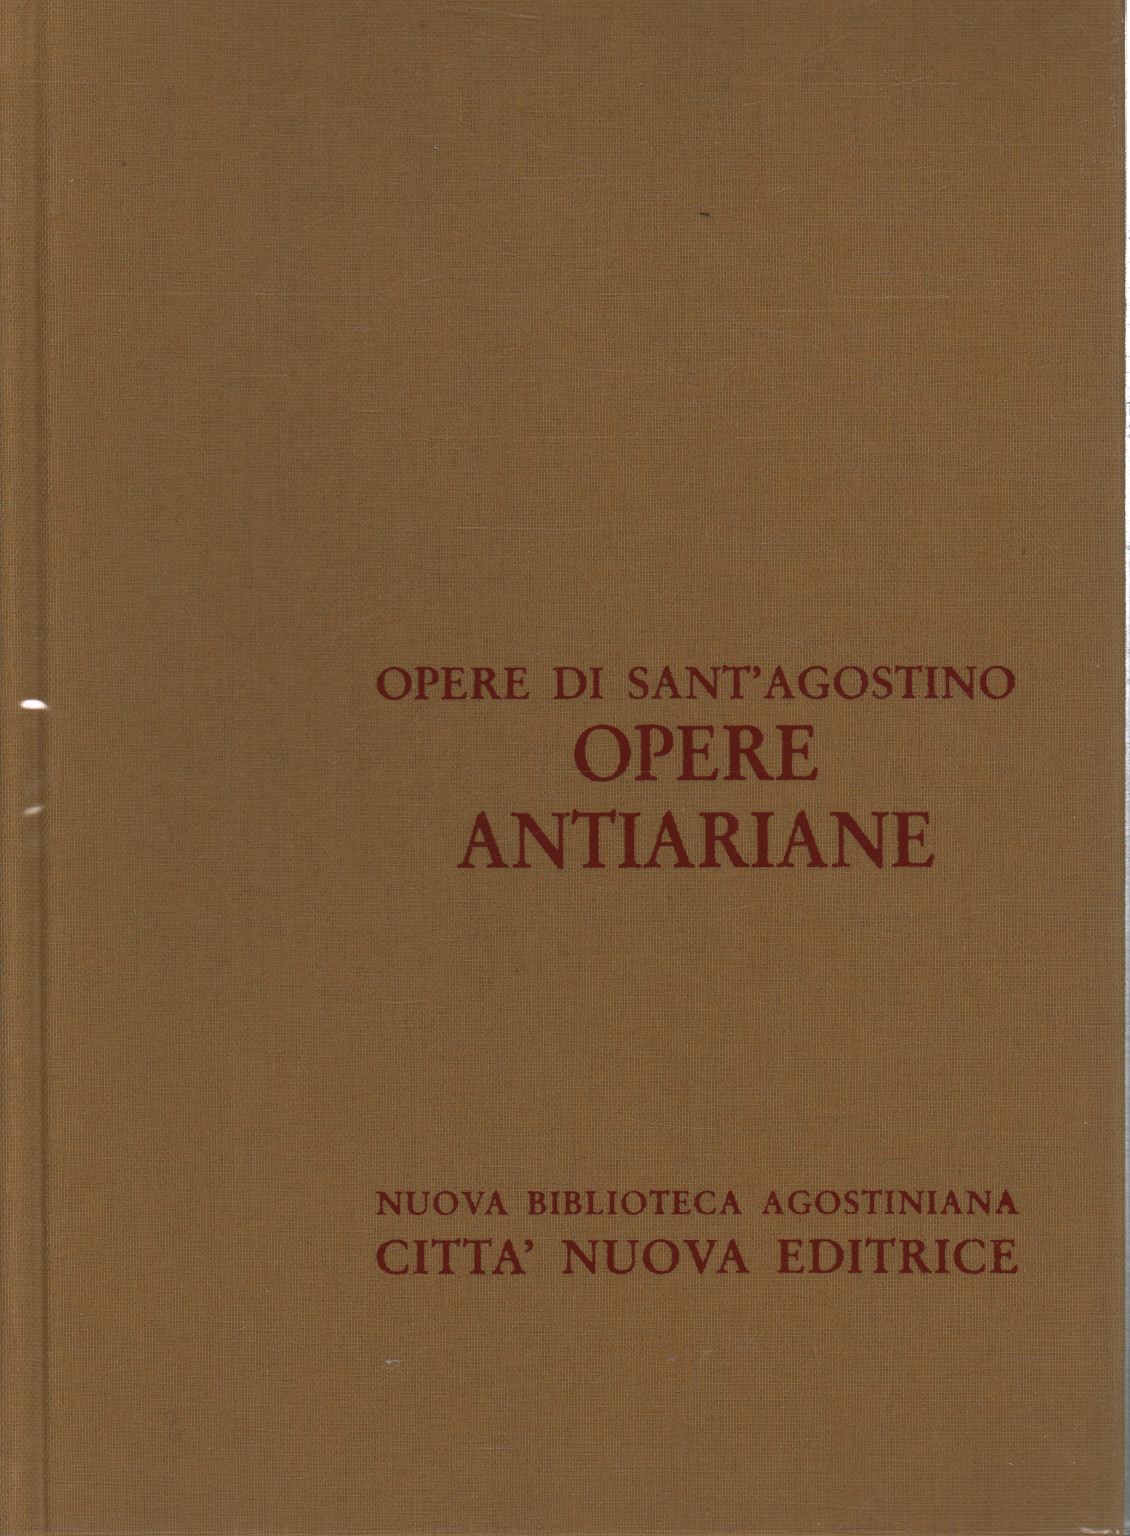 Opere antiariane (vol. XII/2), s.a.